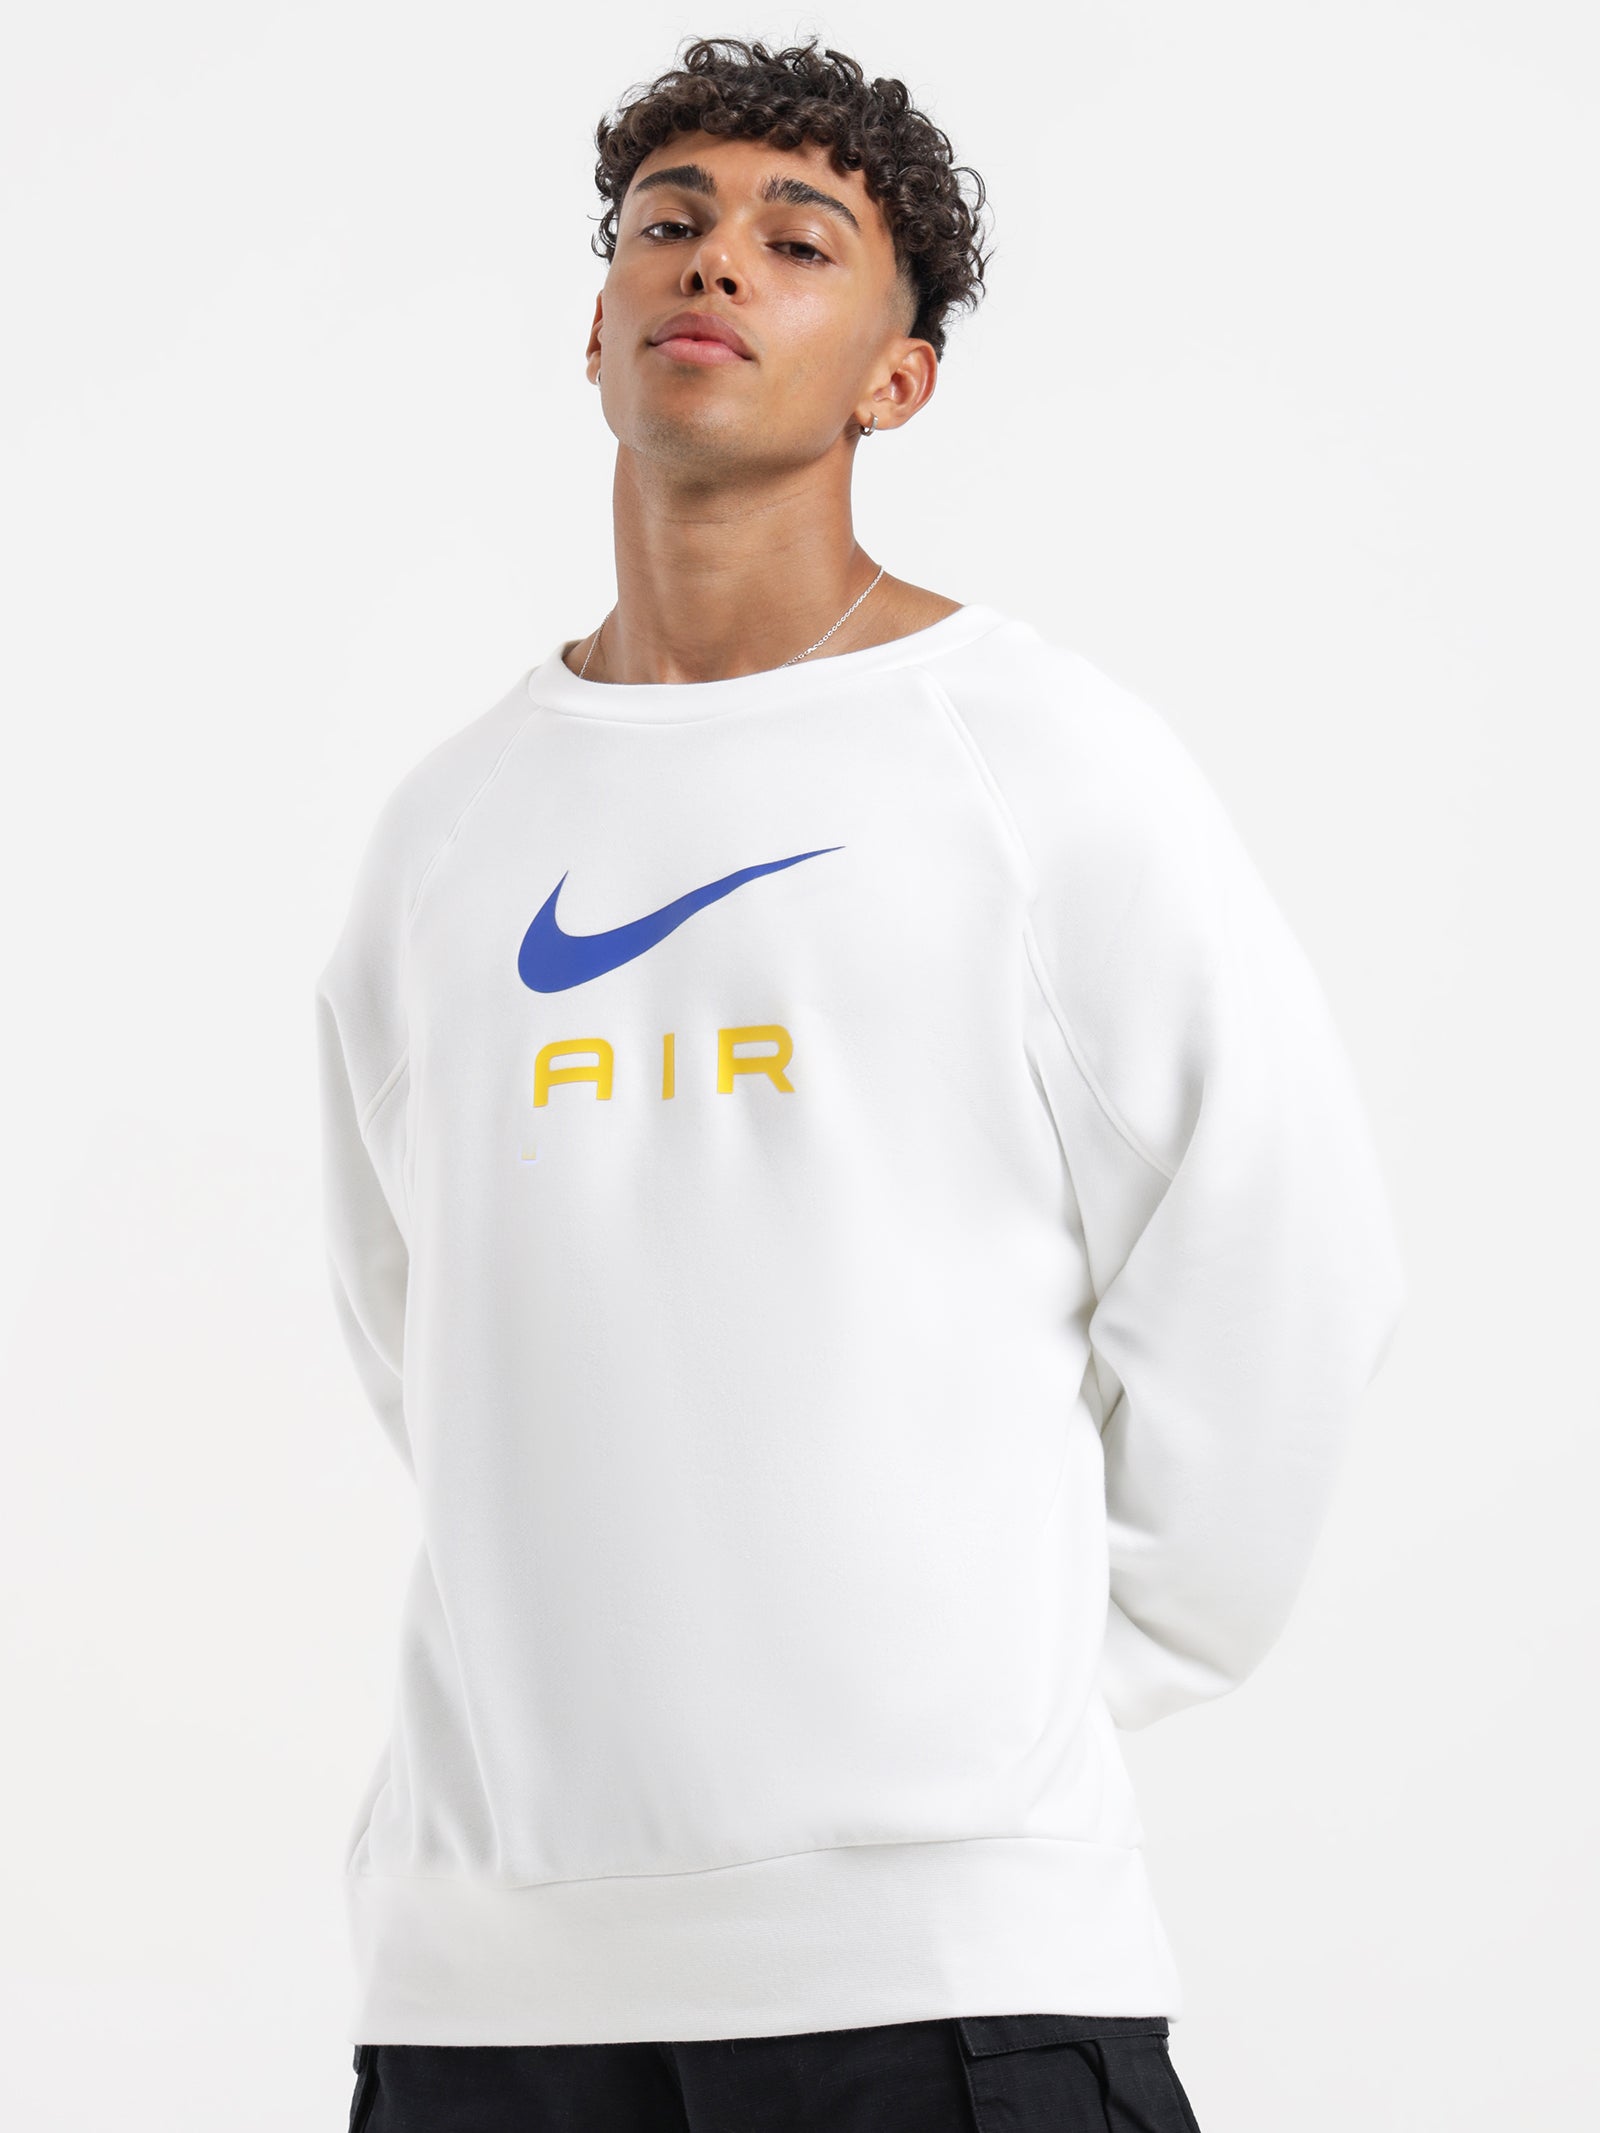 Nike Air Sportswear Sweatshirt in White - Glue Store